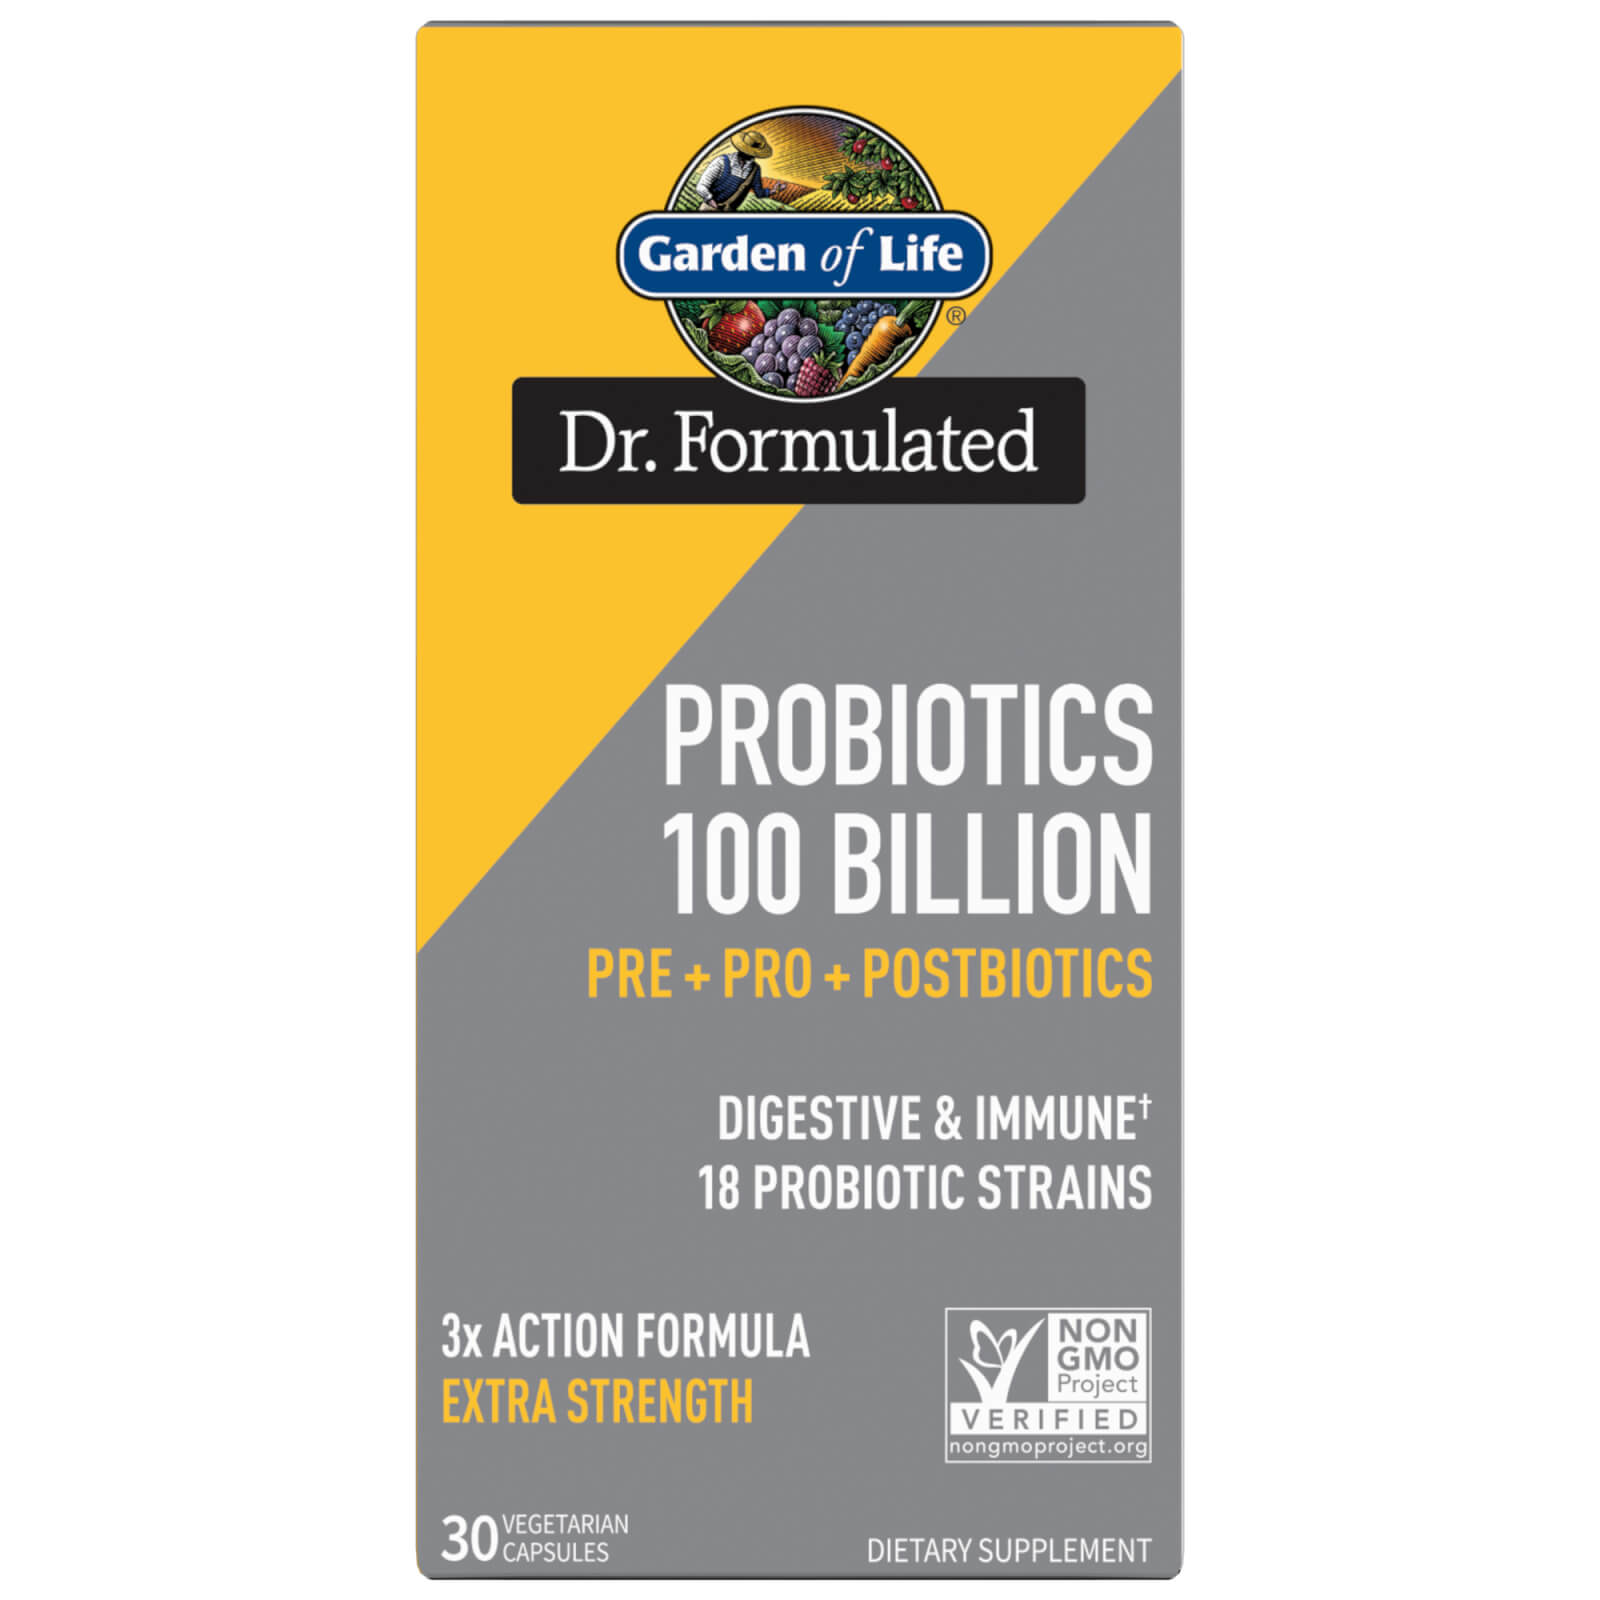 Dr. Formulated Microbiome 100B Pre+Pro+Postbiotics